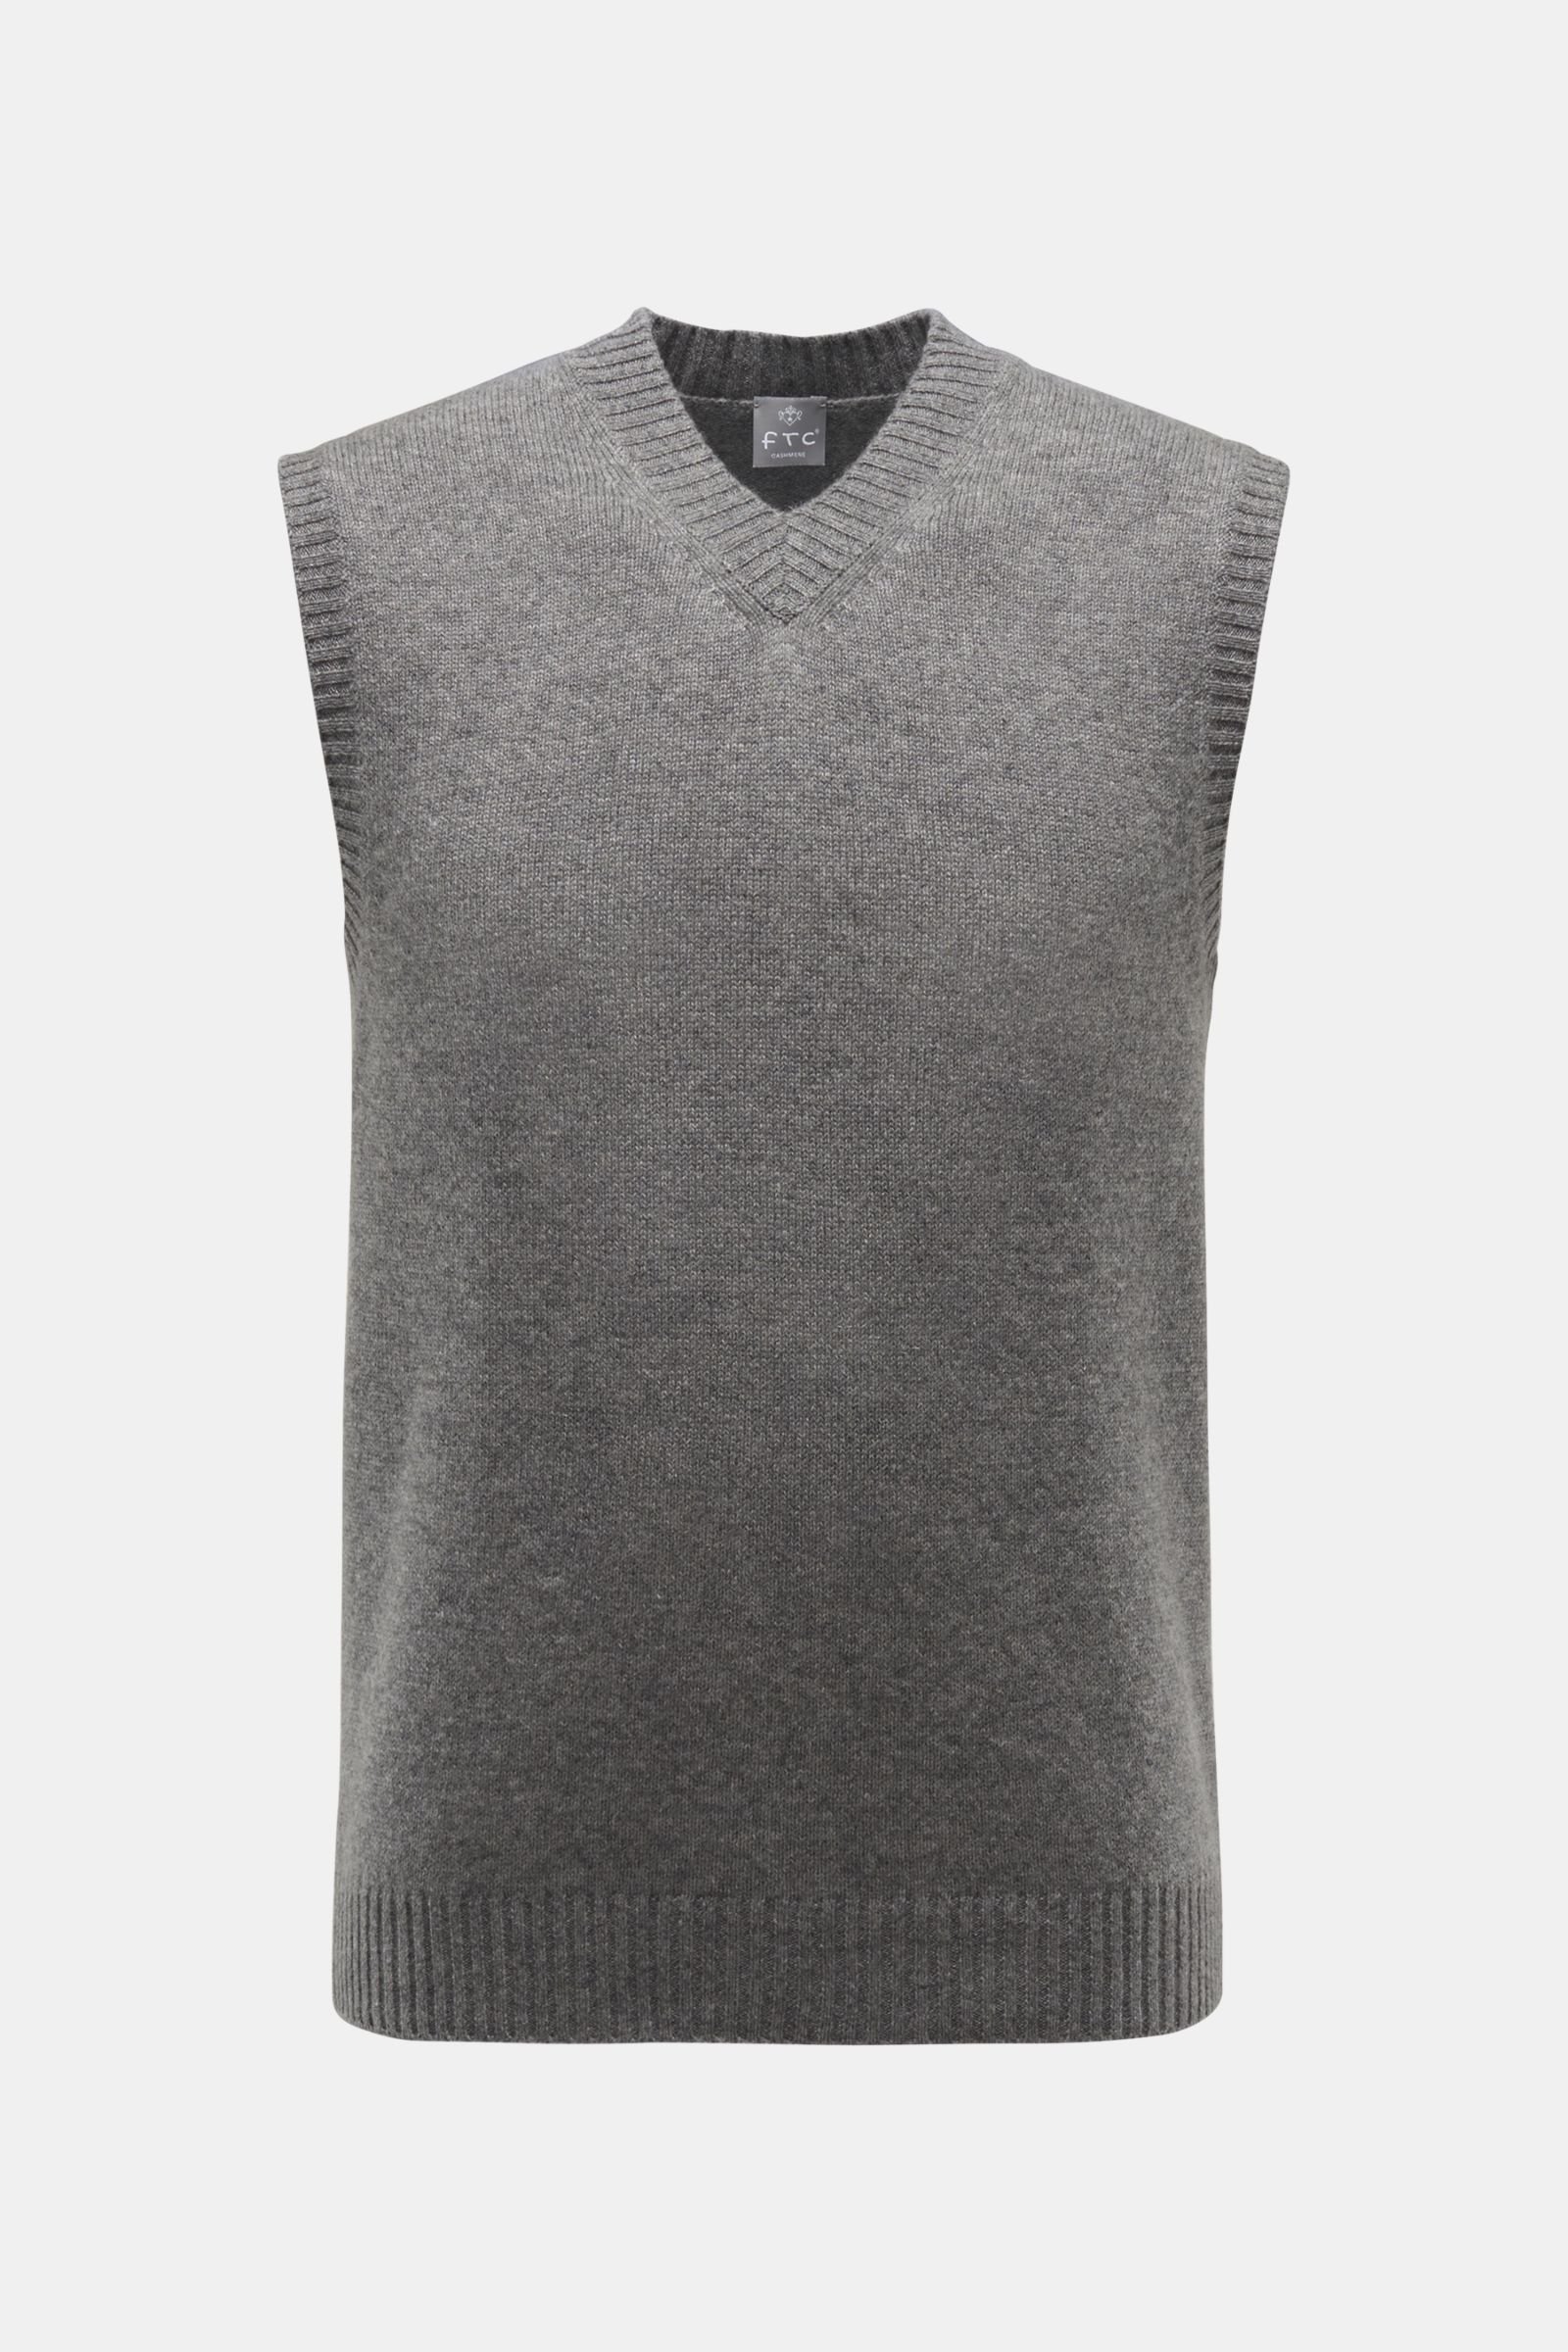 Cashmere V-neck sweater vest grey